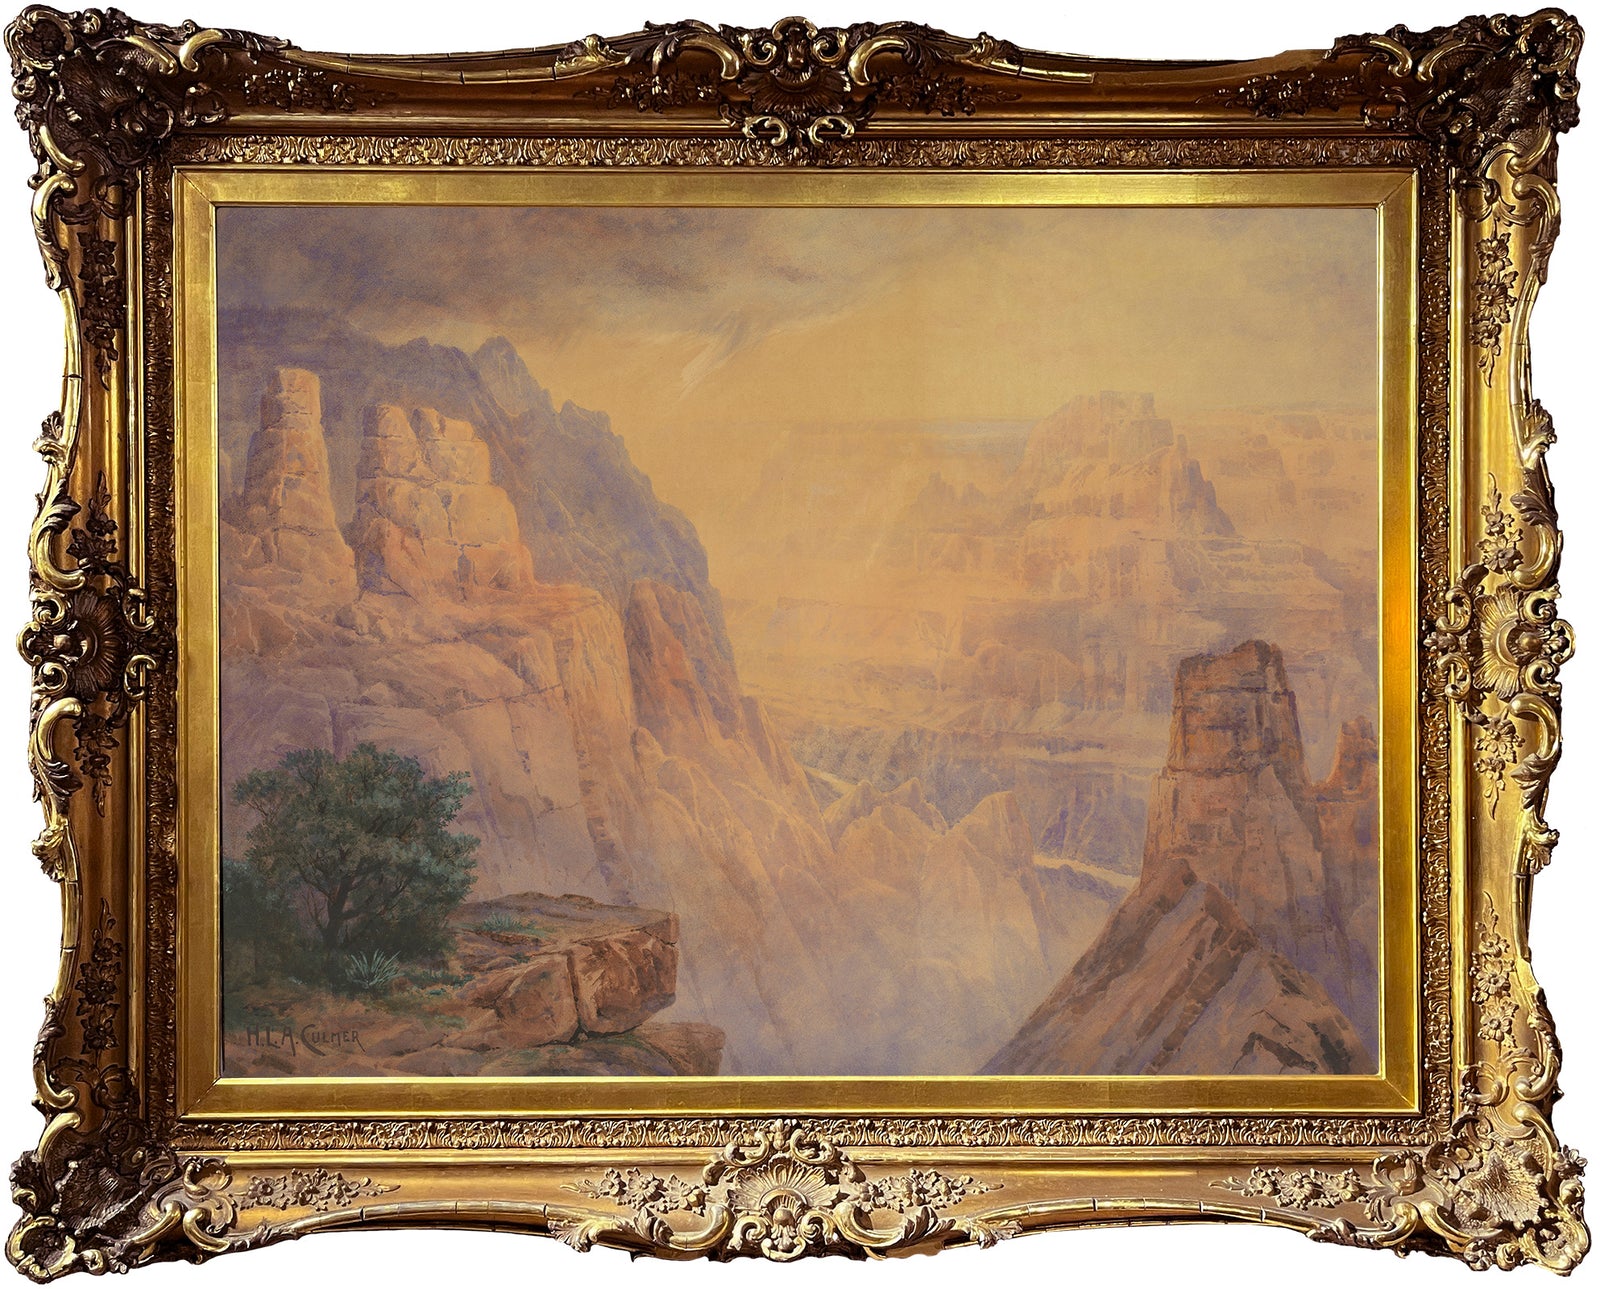 H.L.A. Culmer, Grand Canyon of the Colorado in Arizona